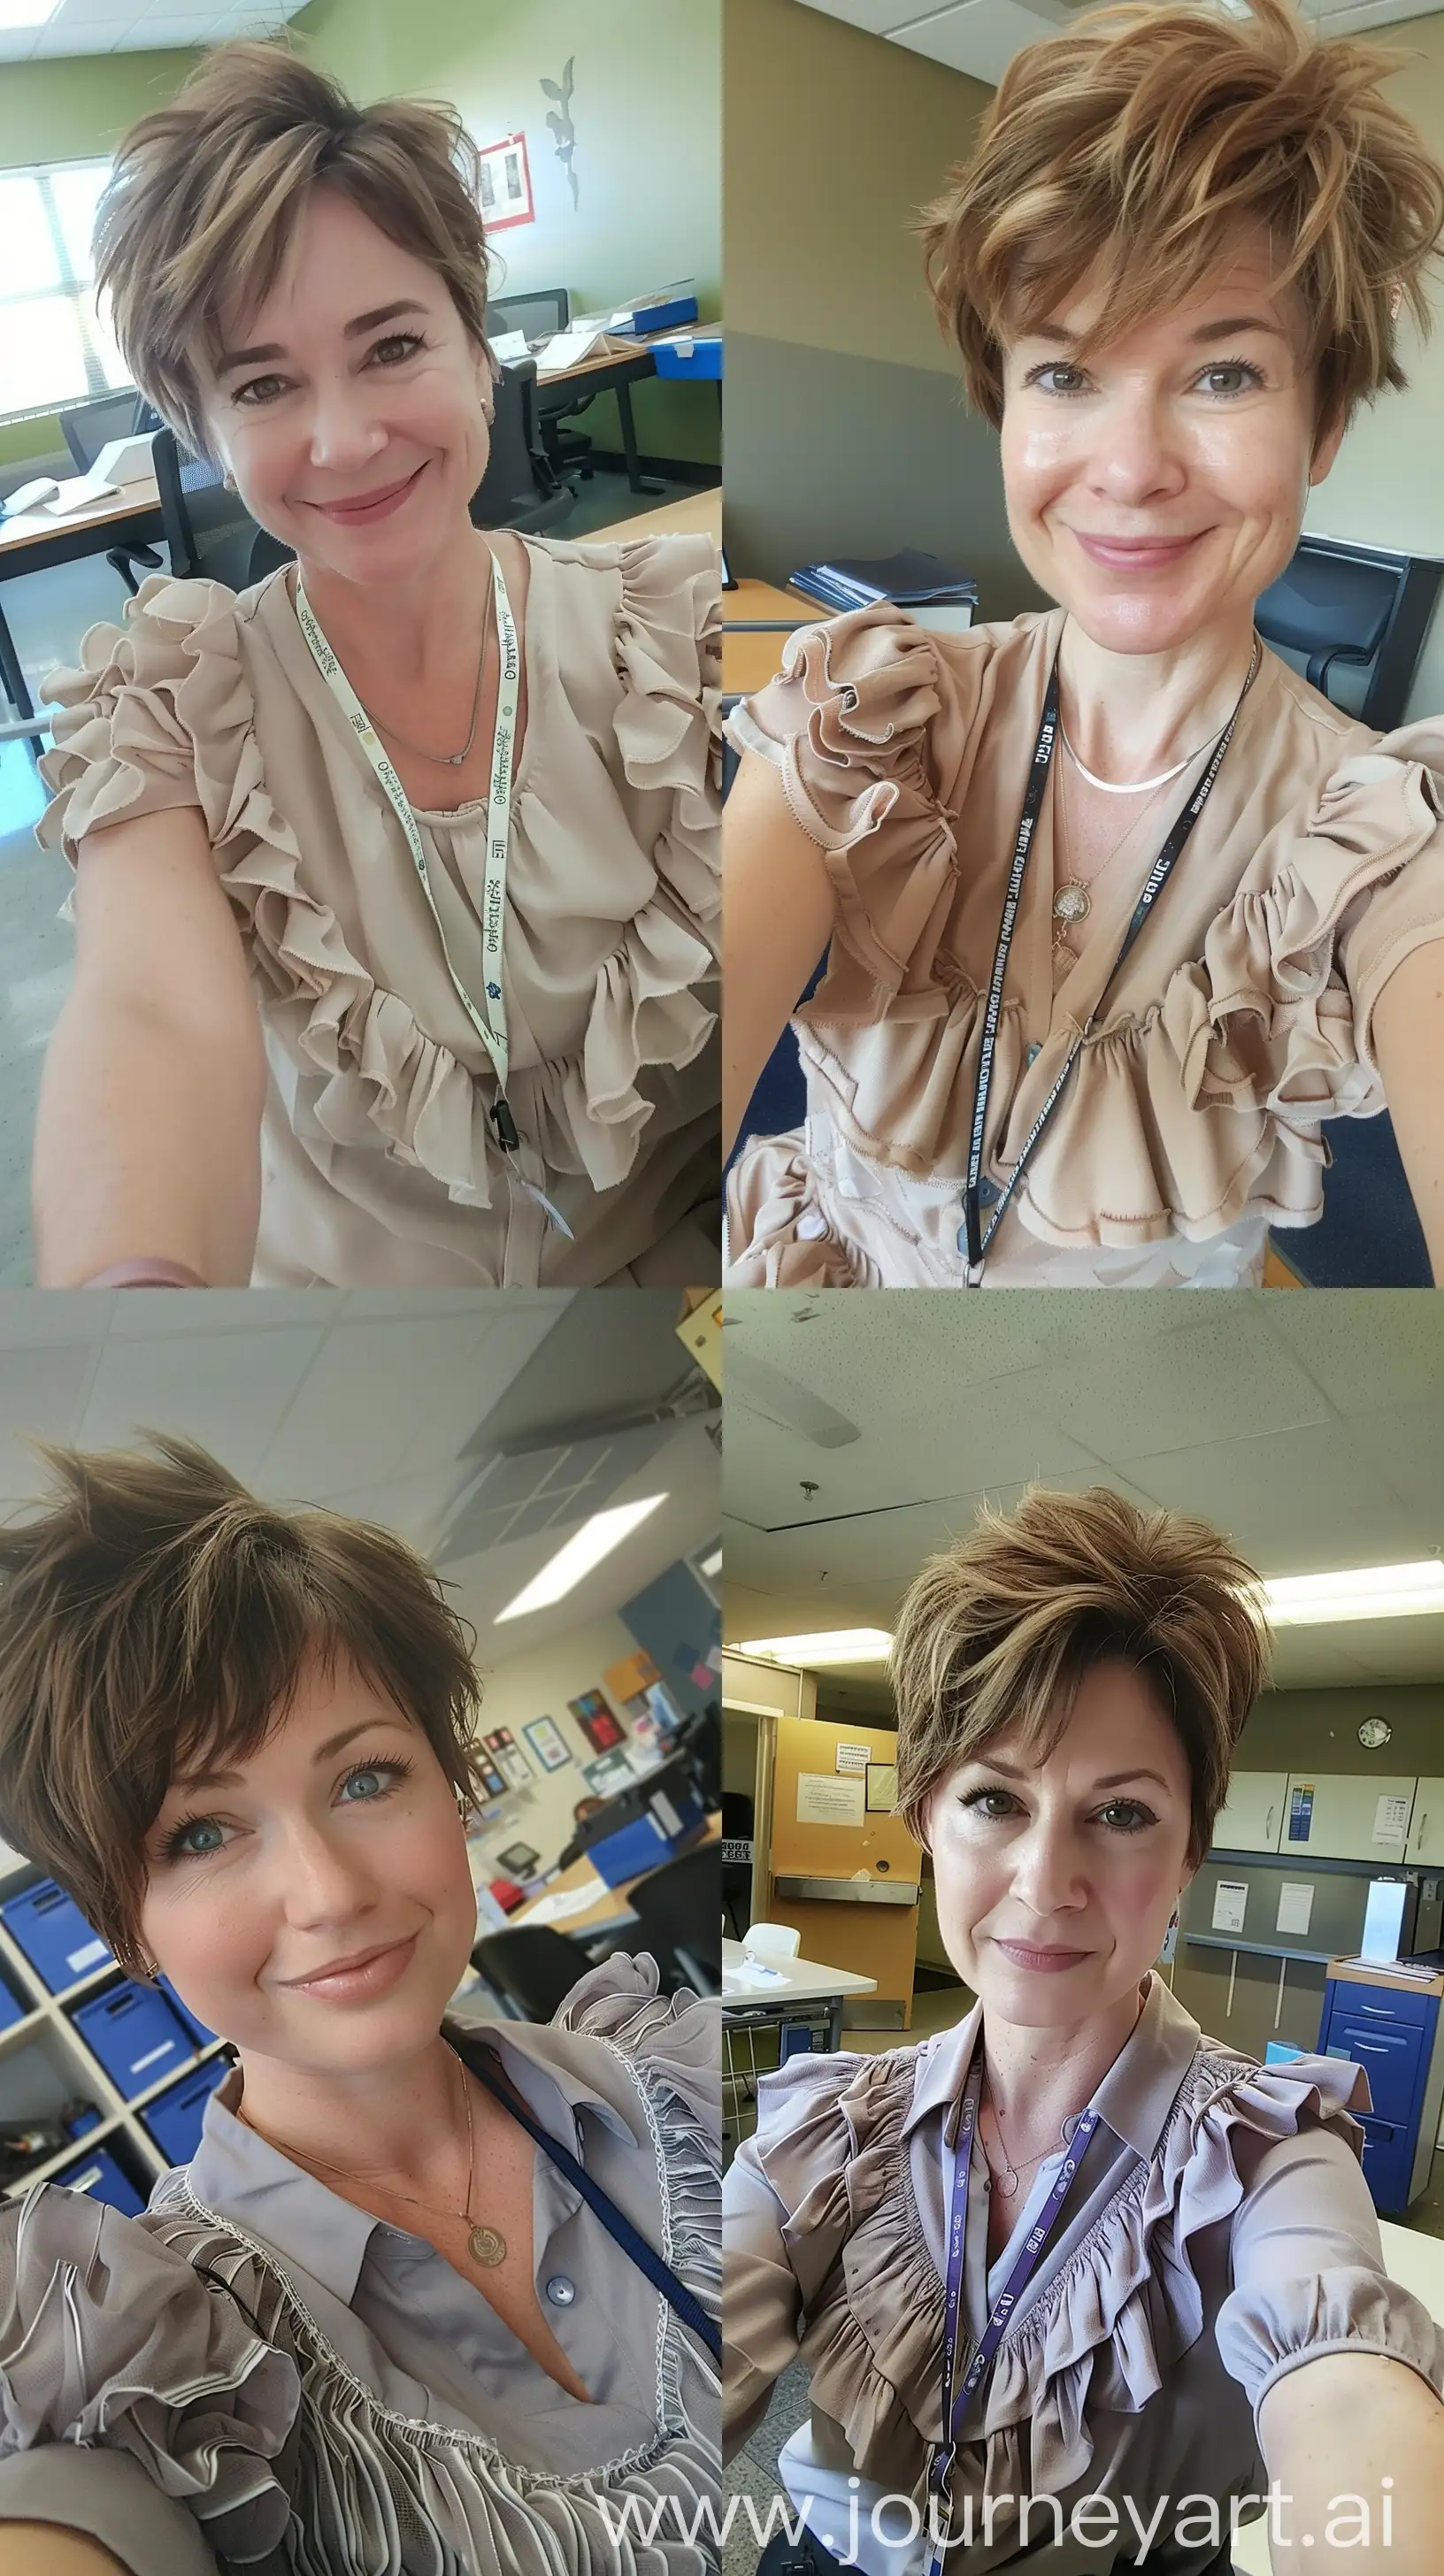 Charming-Elementary-School-Teacher-Capturing-a-Selfie-Moment-at-Her-Desk